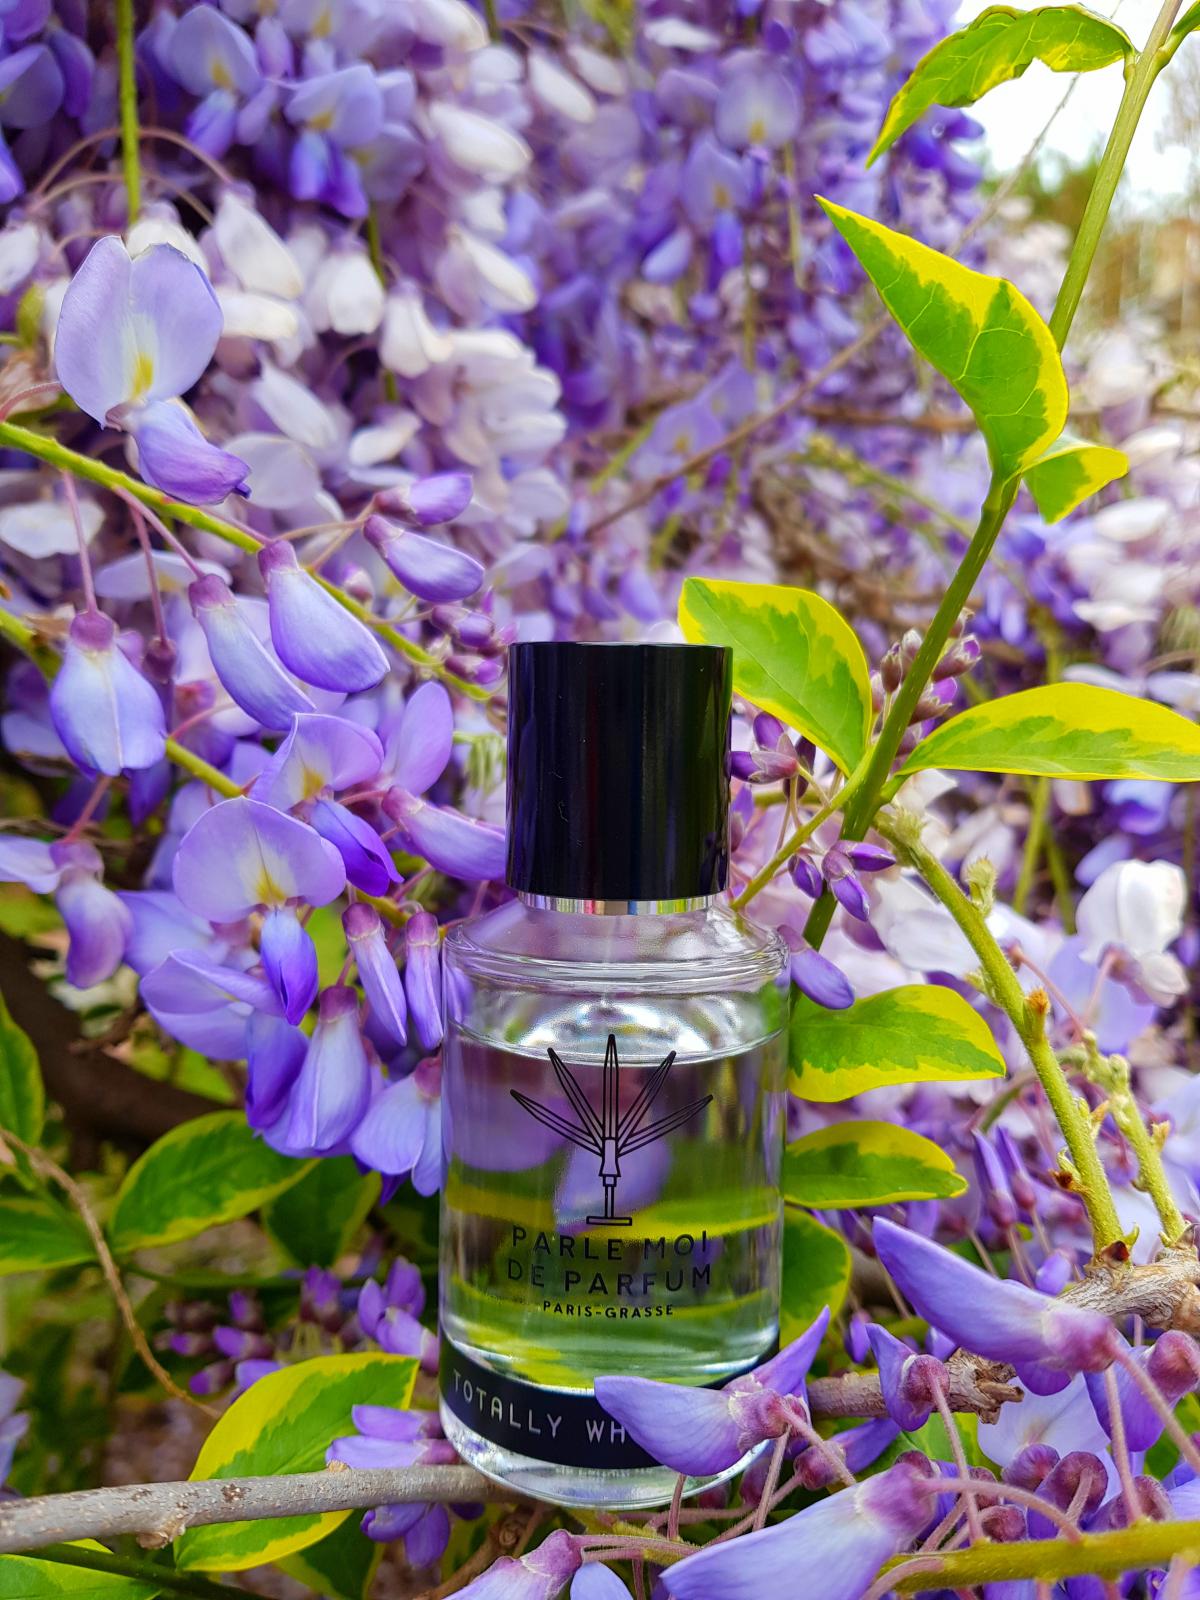 Totally White 126 Parle Moi de Parfum perfume - a fragrance for women and men 2016